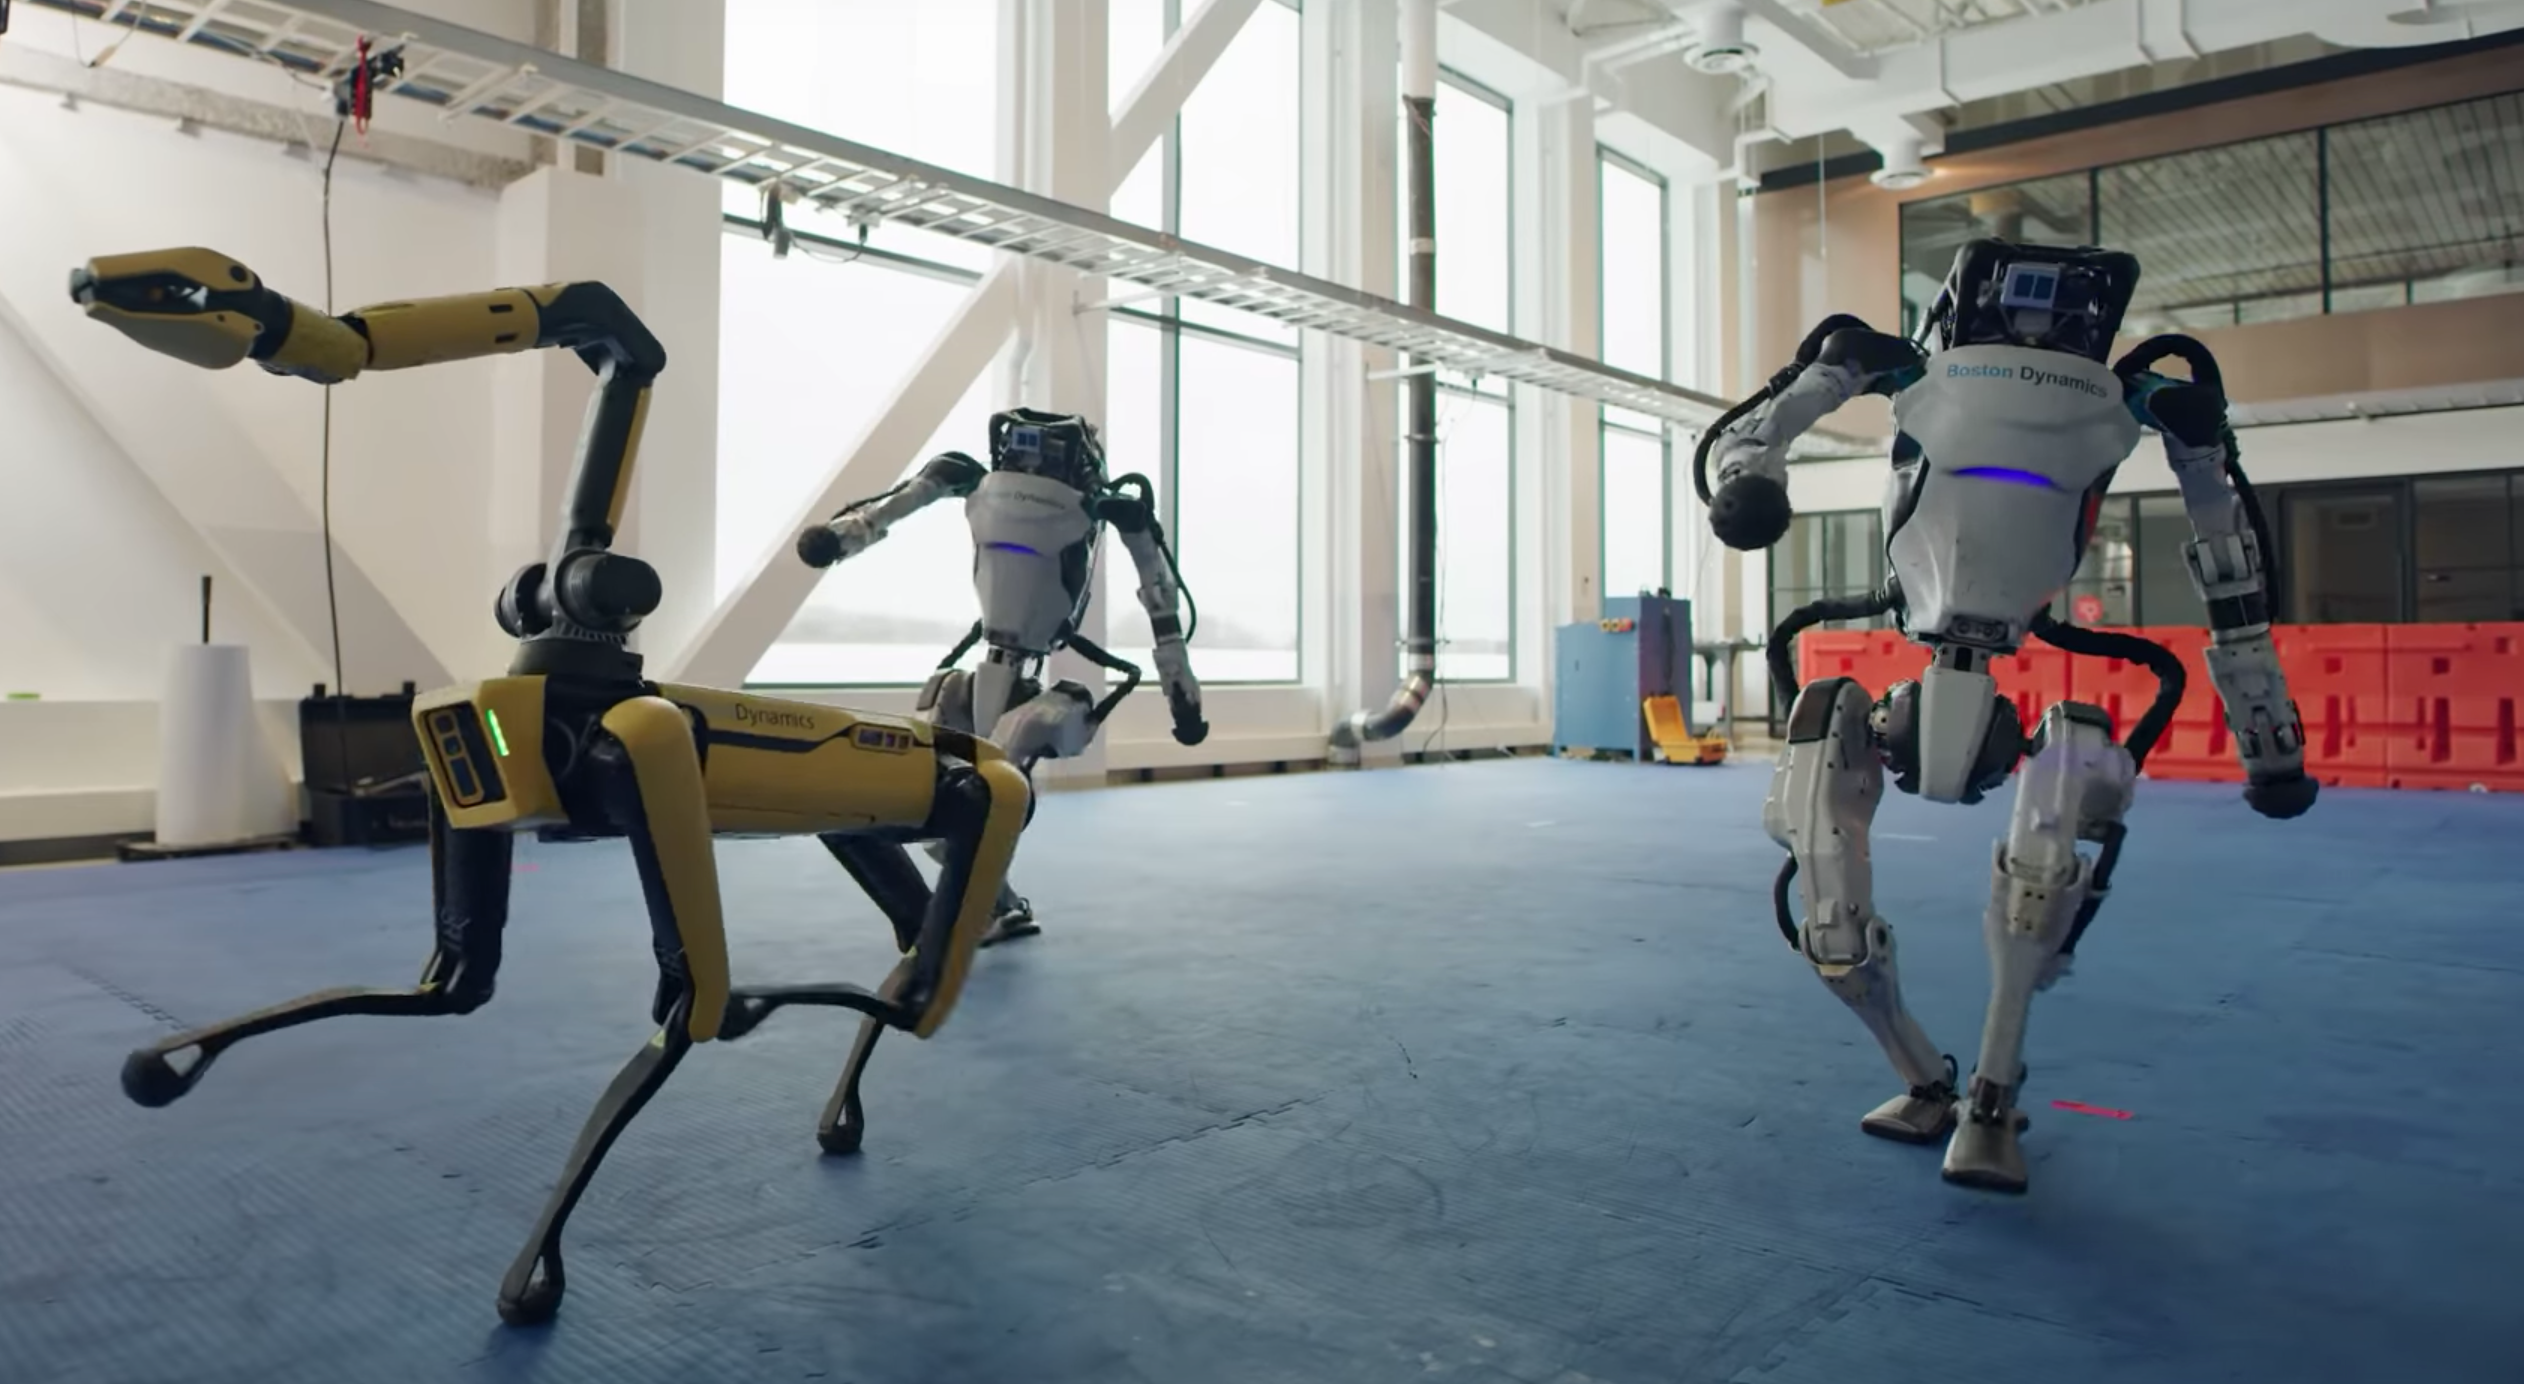 Boston Dynamics robots detonate a new viral video, Elon Musk takes notice